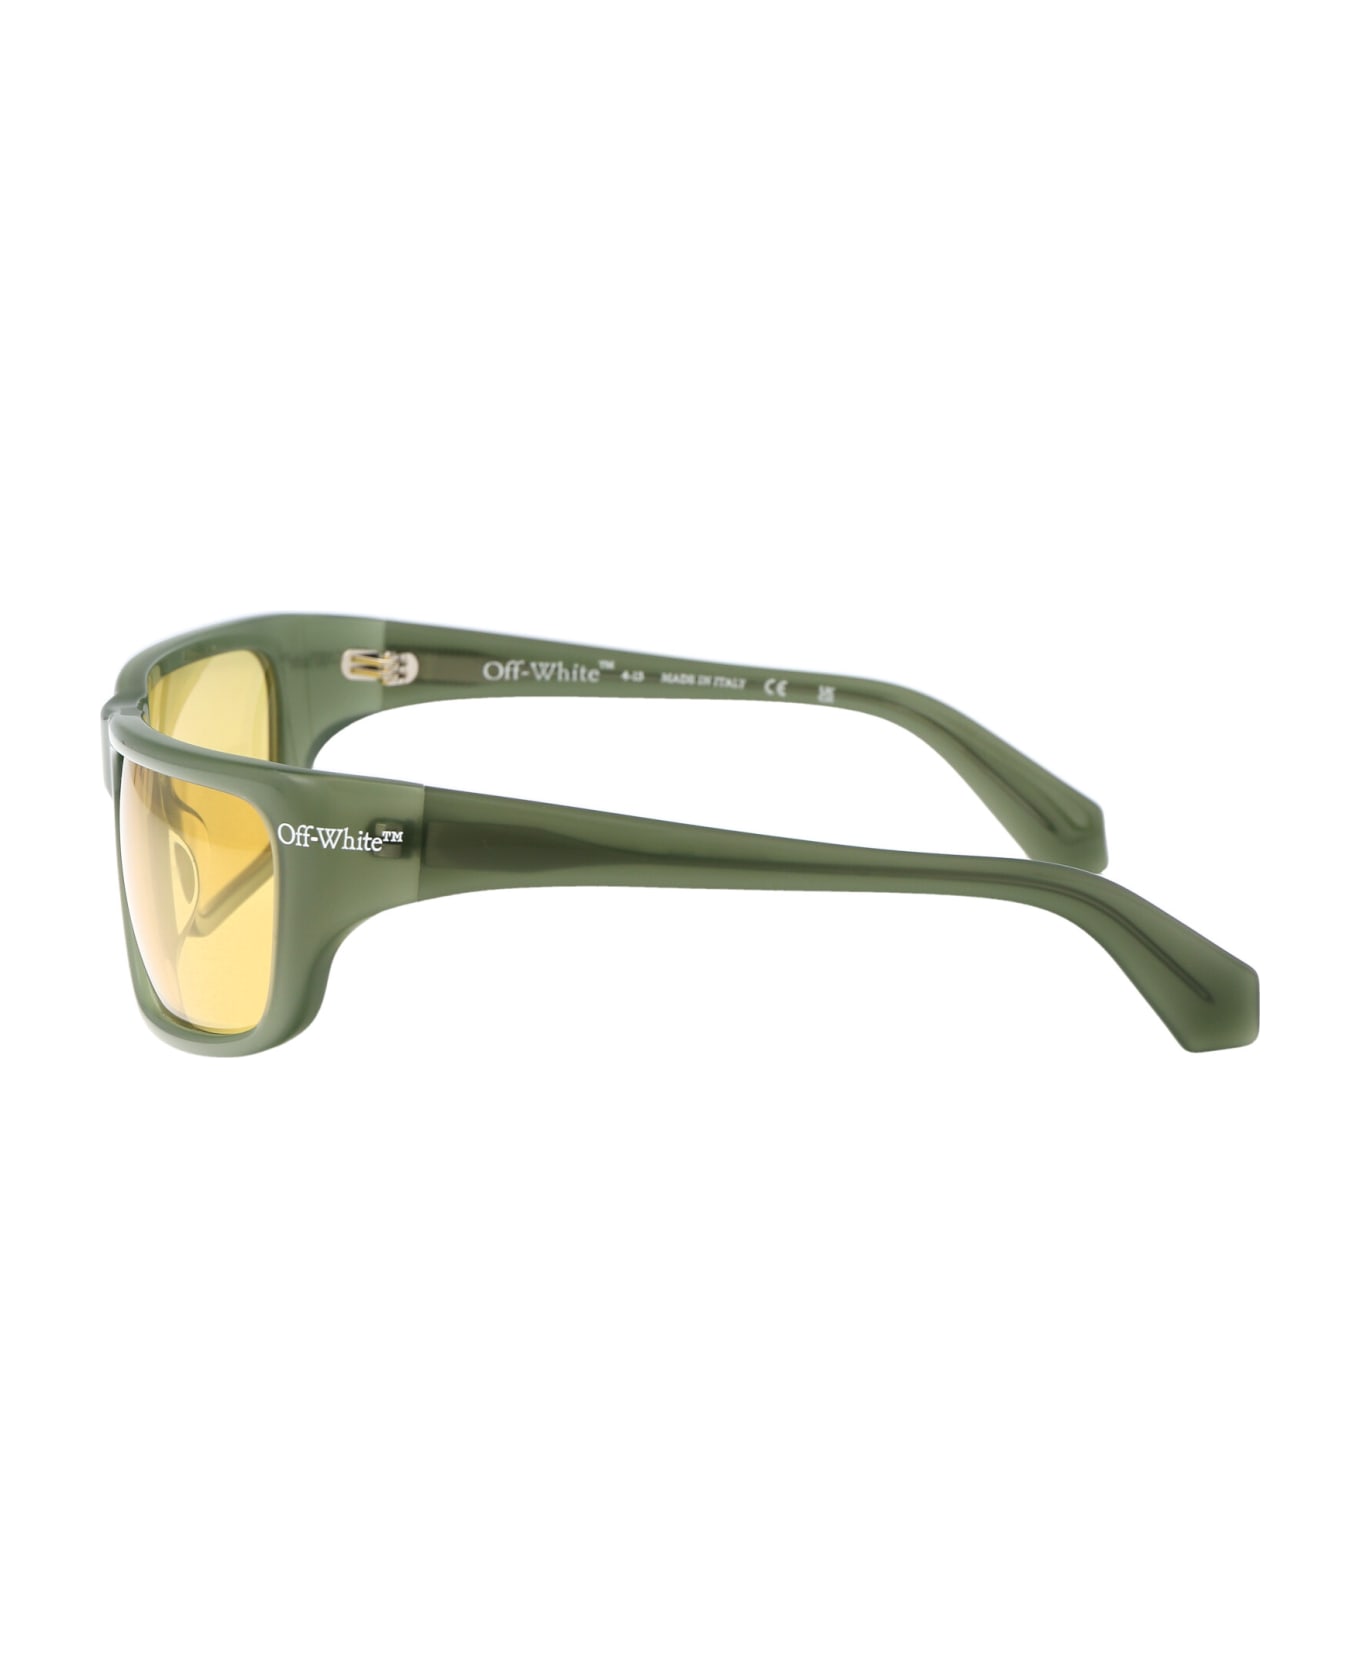 Off-White Bologna Sunglasses - 5518 SAGE GREEN